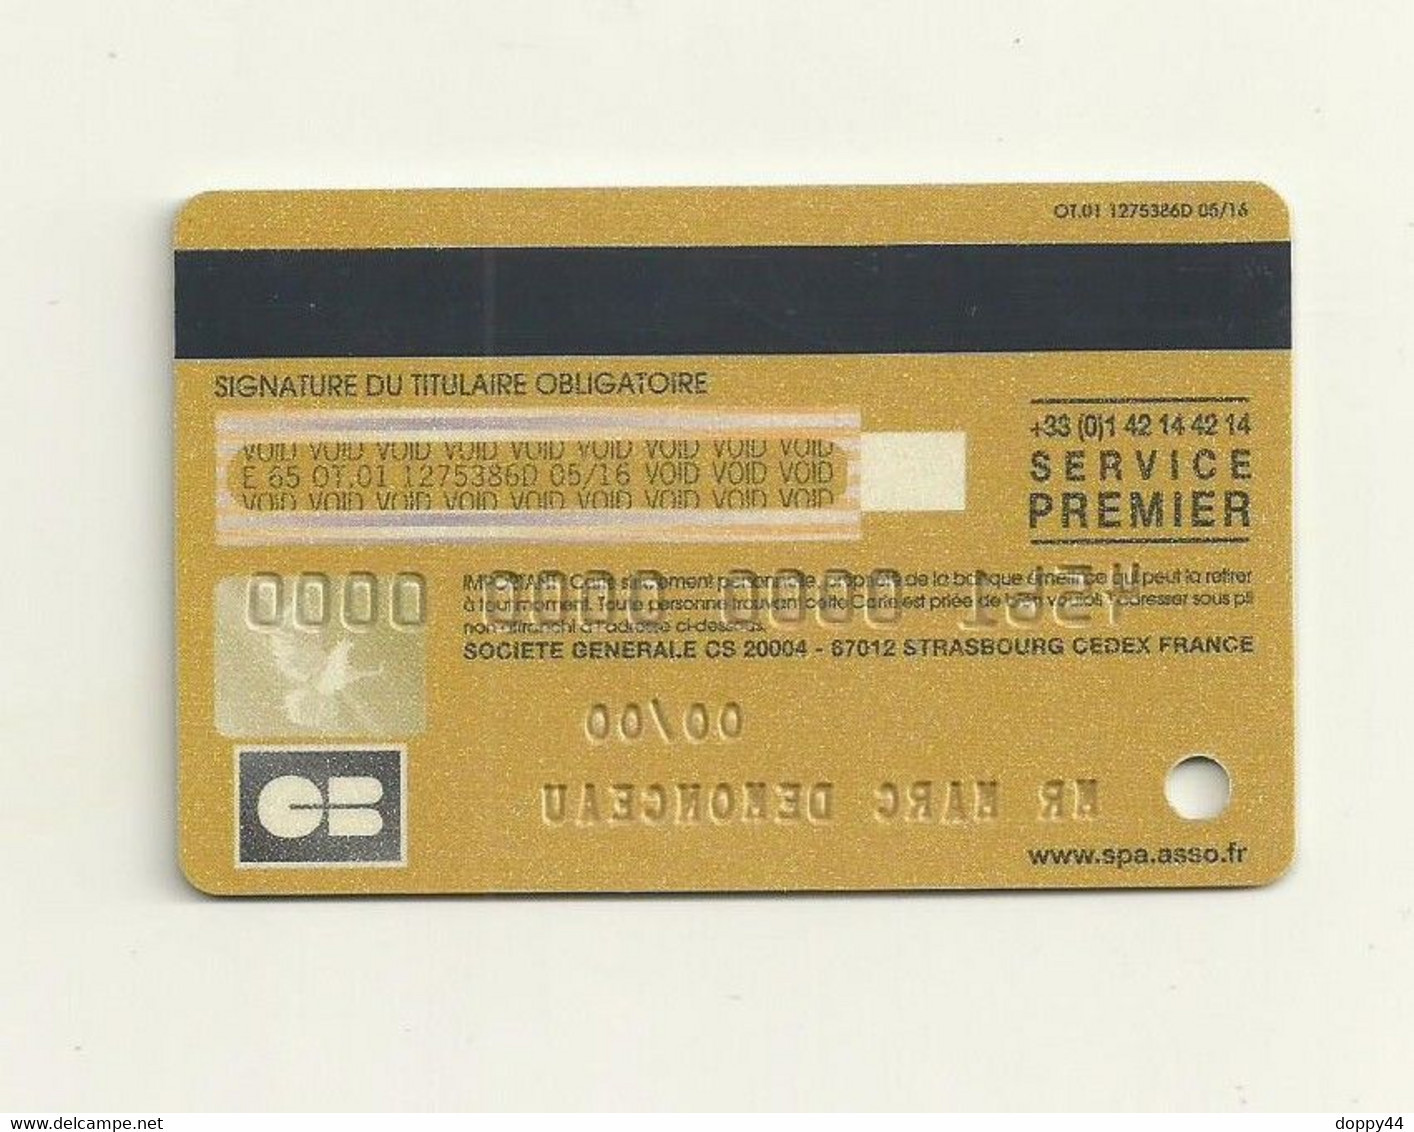 CARTE DE DEMONSTRATION VISA PREMIER  THEME  CHIENS/SPA - Credit Cards (Exp. Date Min. 10 Years)